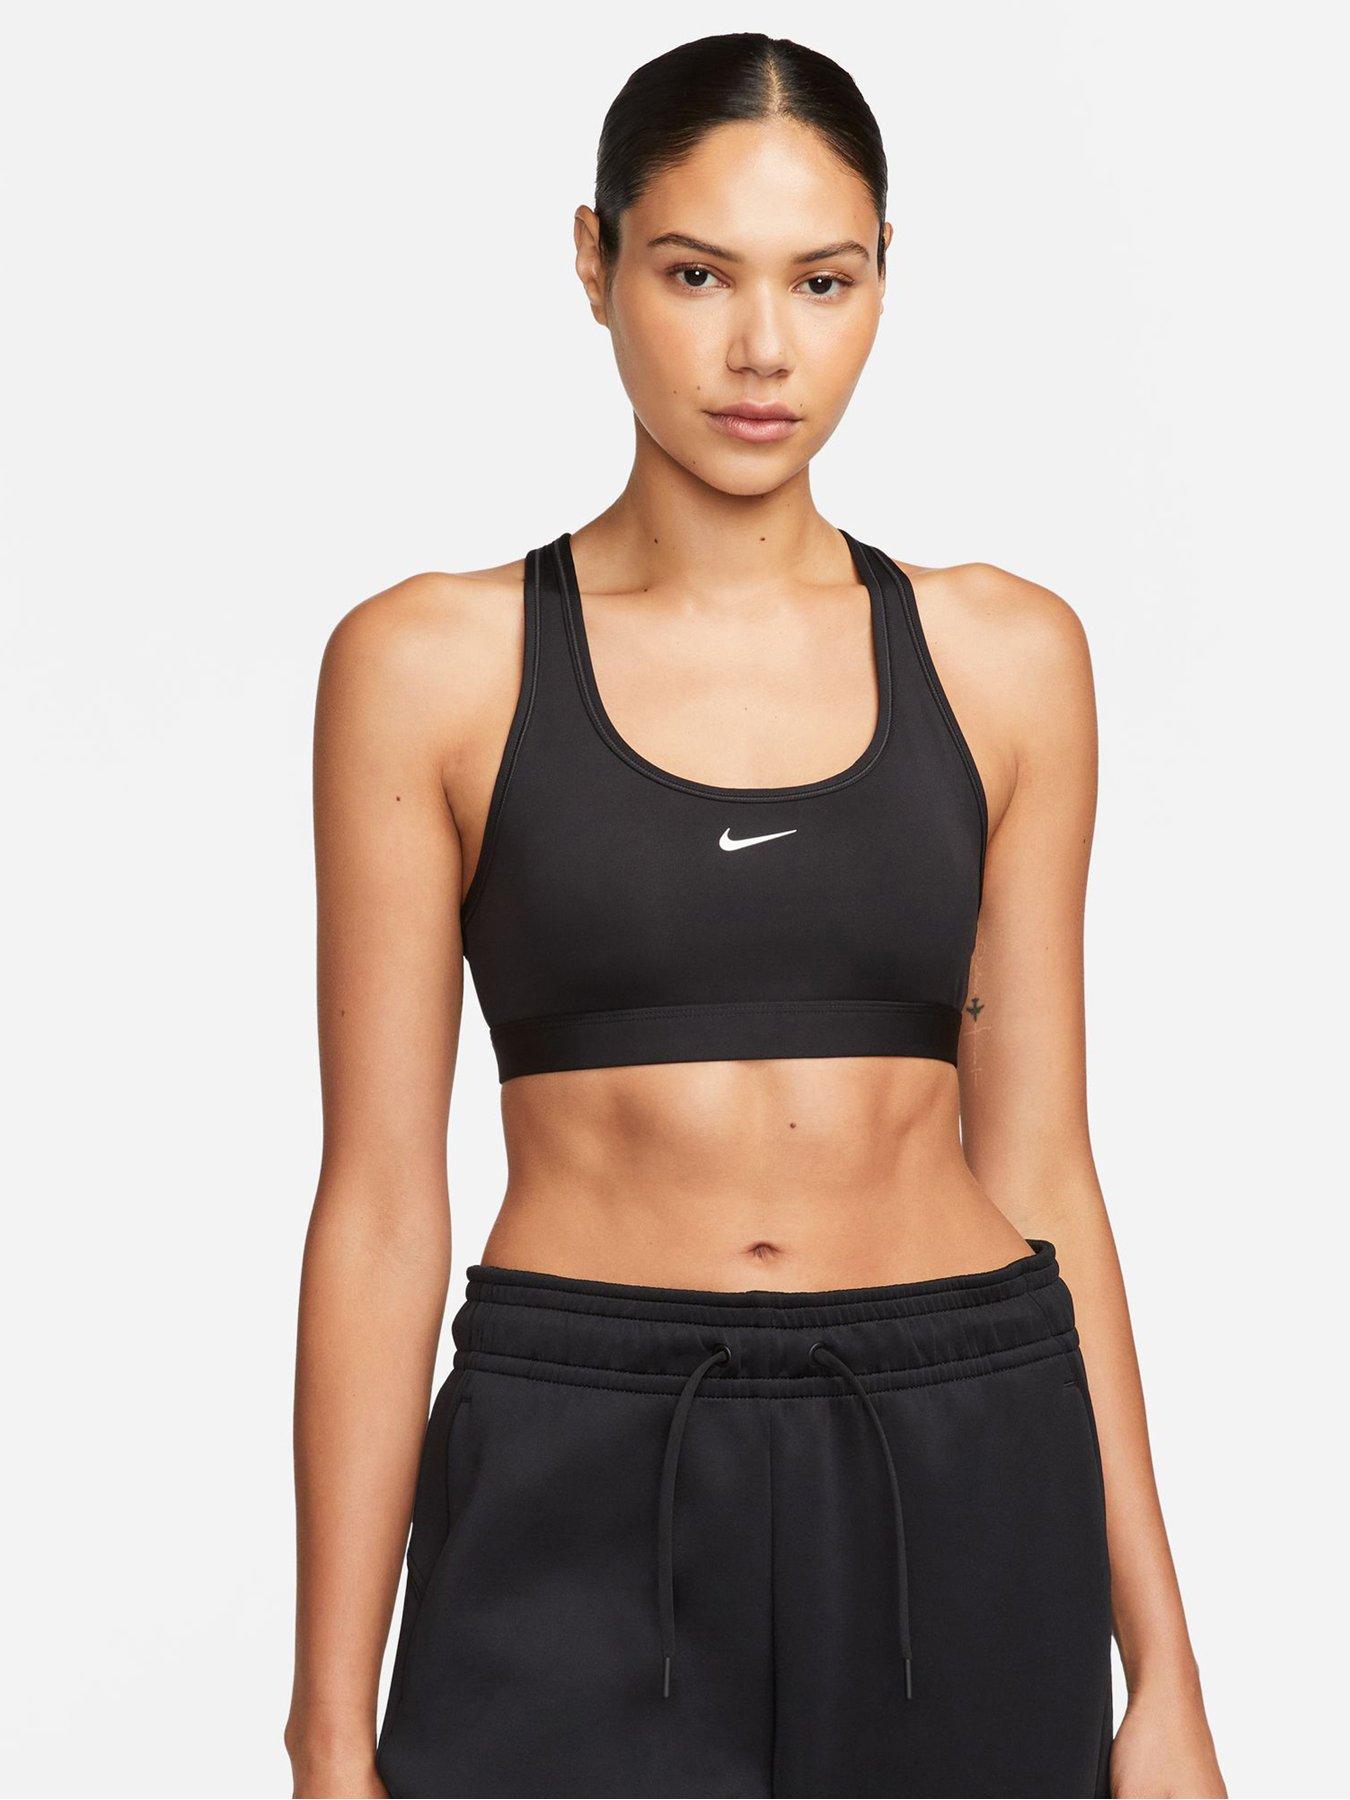 Buy Nike Women's Pro Indy Sports Bra (Black/White, Large) at